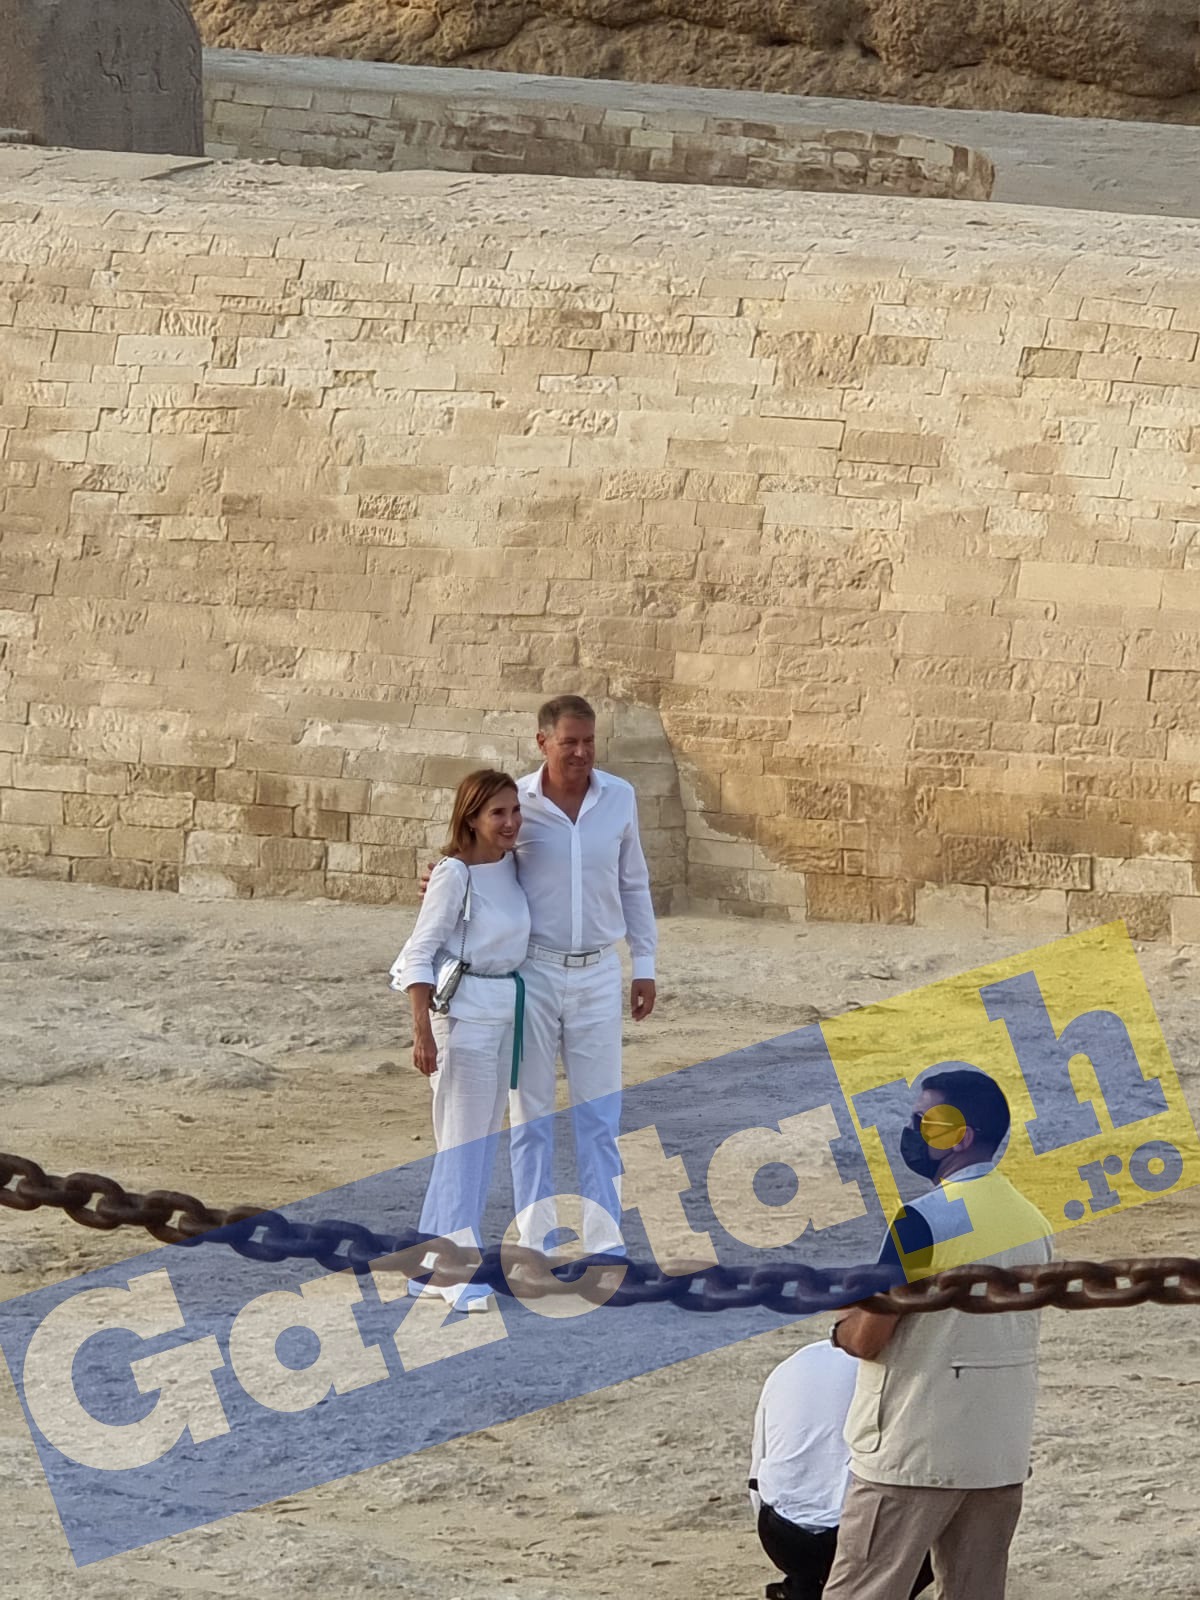 Klaus Iohannis și soția sa, în vizită la piramide în Egipt. FOTO